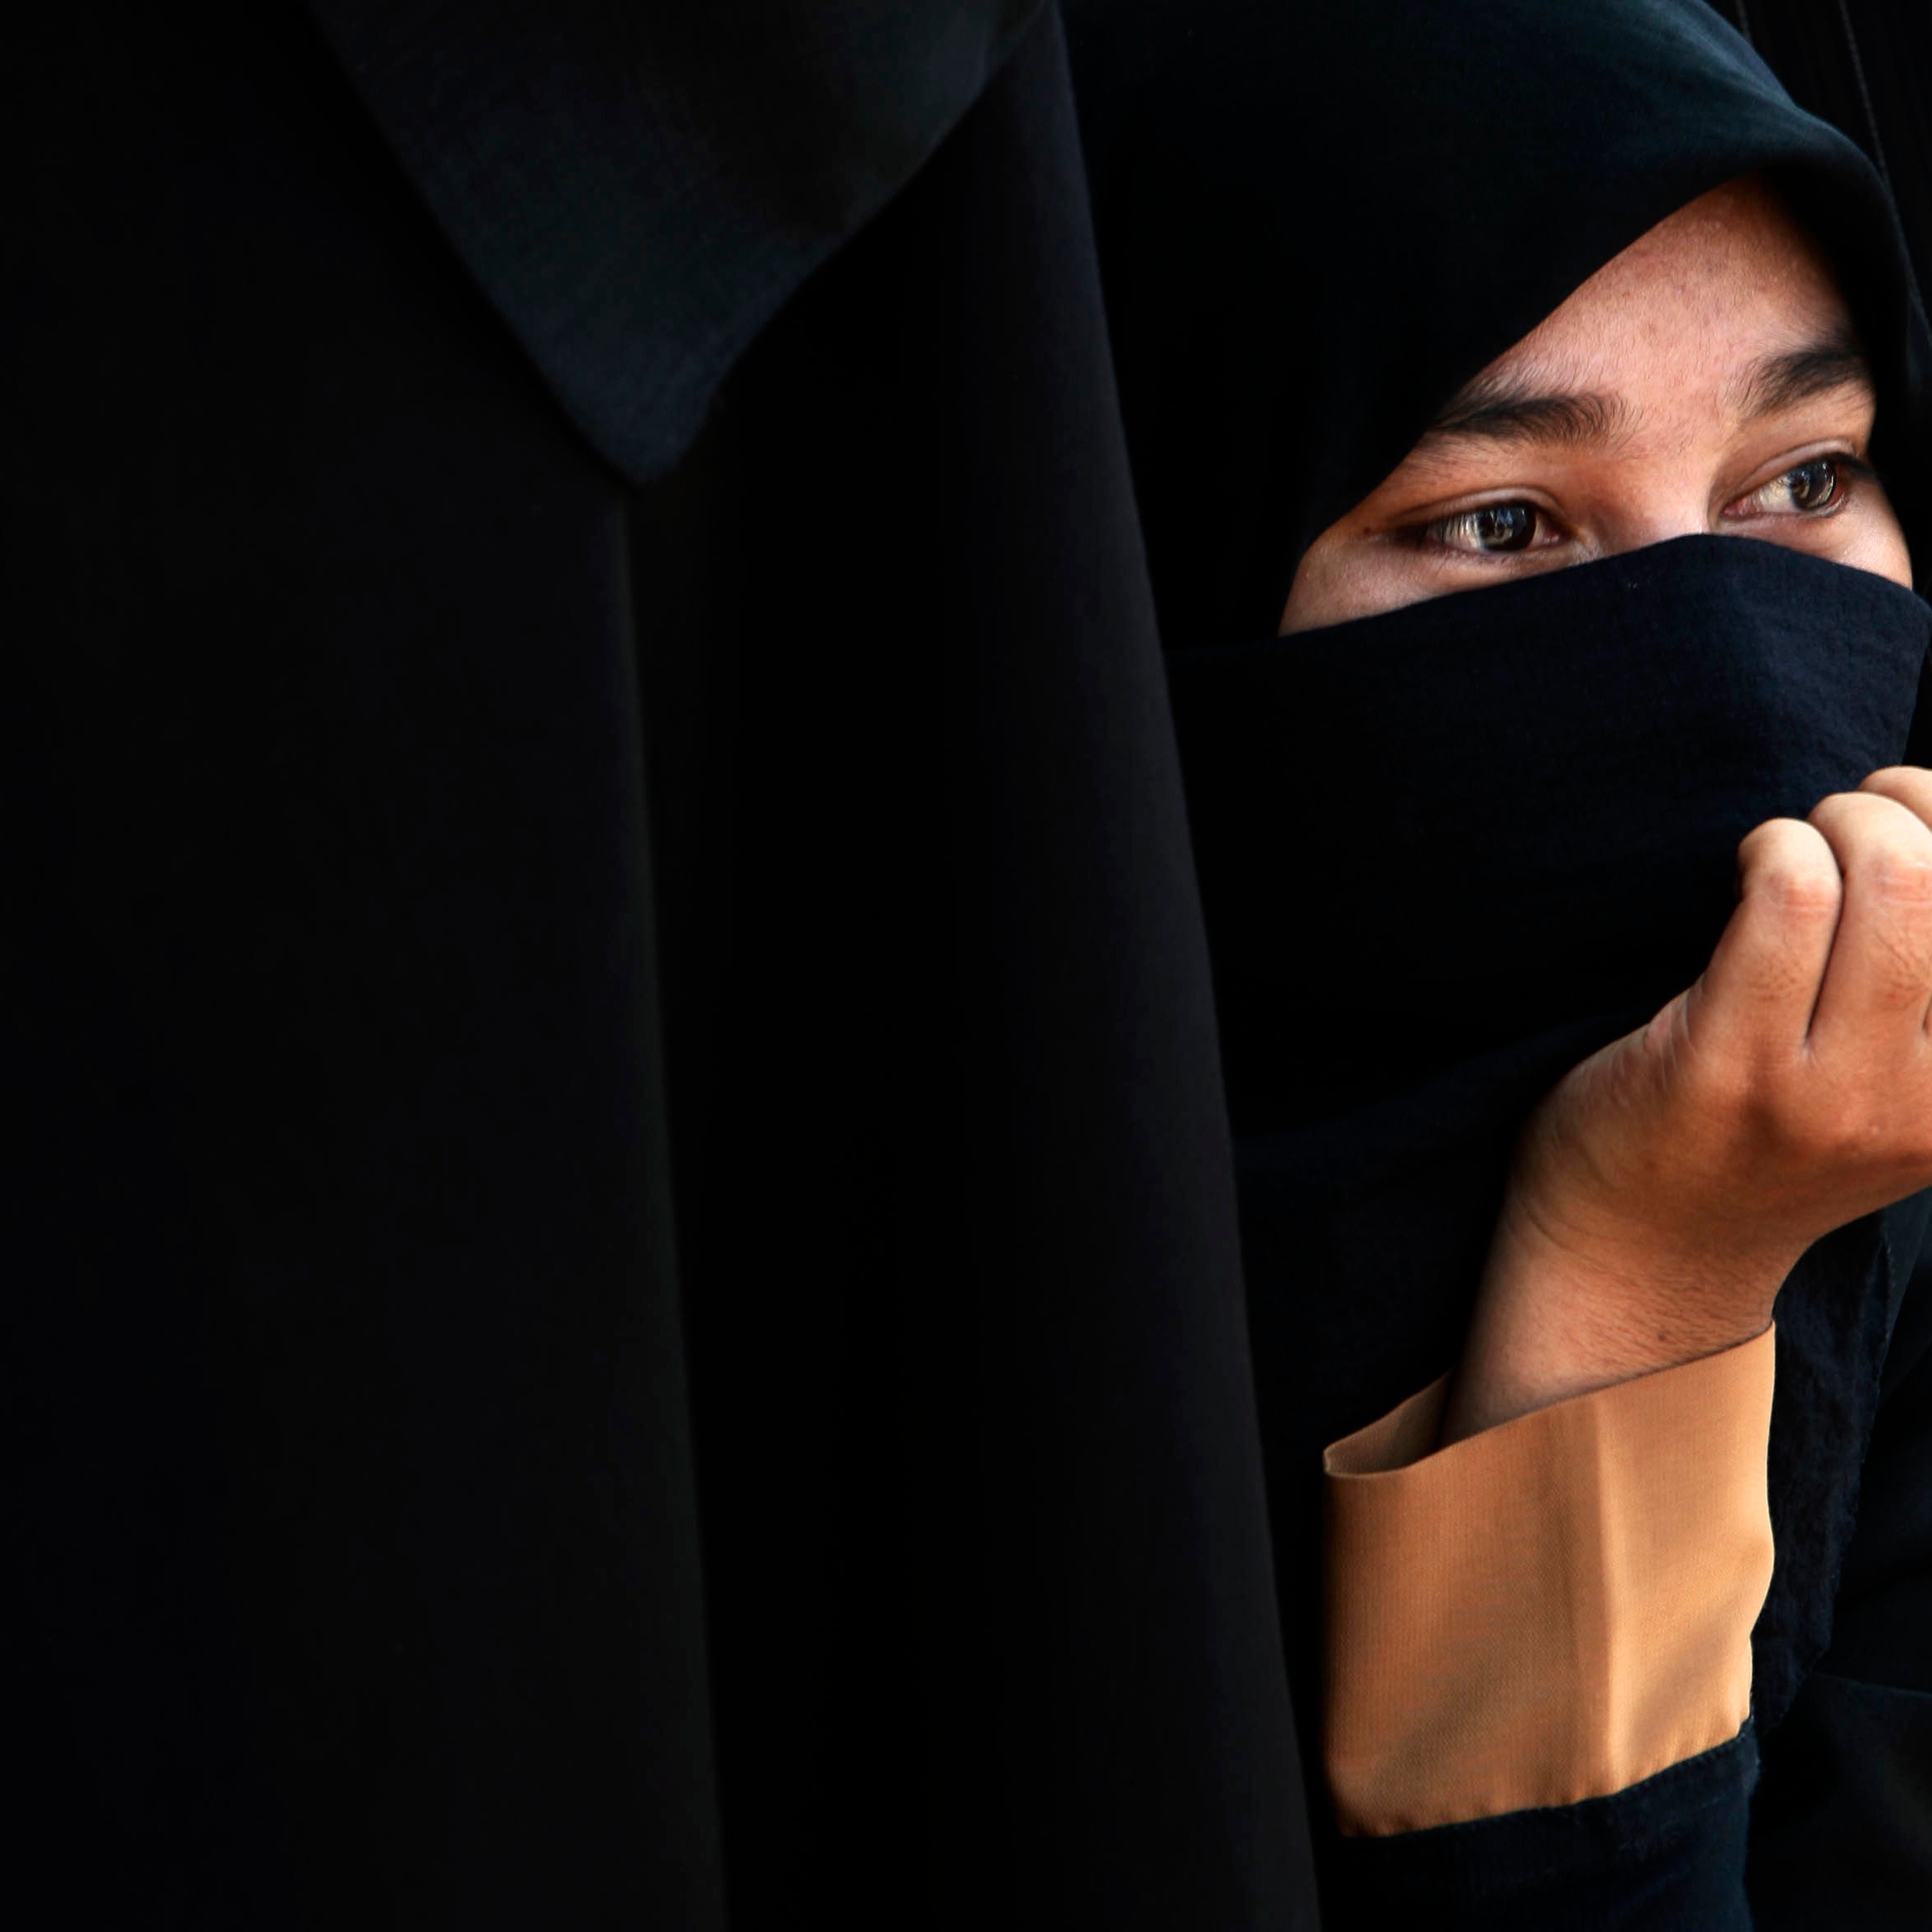 Perempuan Bercadar Justru Menghadapi Diskriminasi Di Provinsi Paling Islami